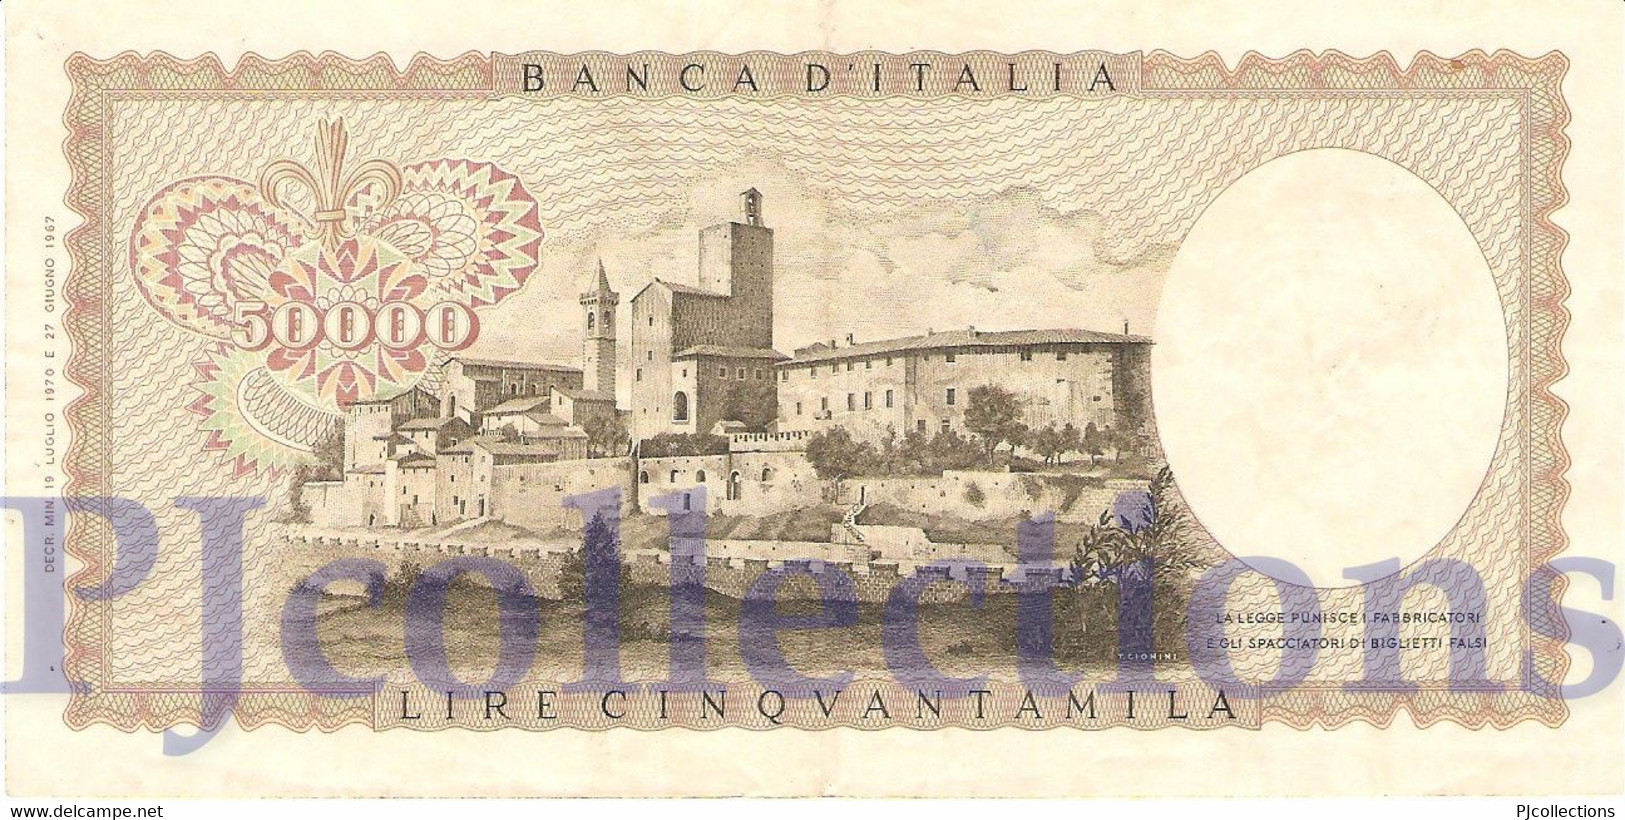 ITALY 50000 LIRE 1970 PICK 99b VF+ - 50.000 Lire